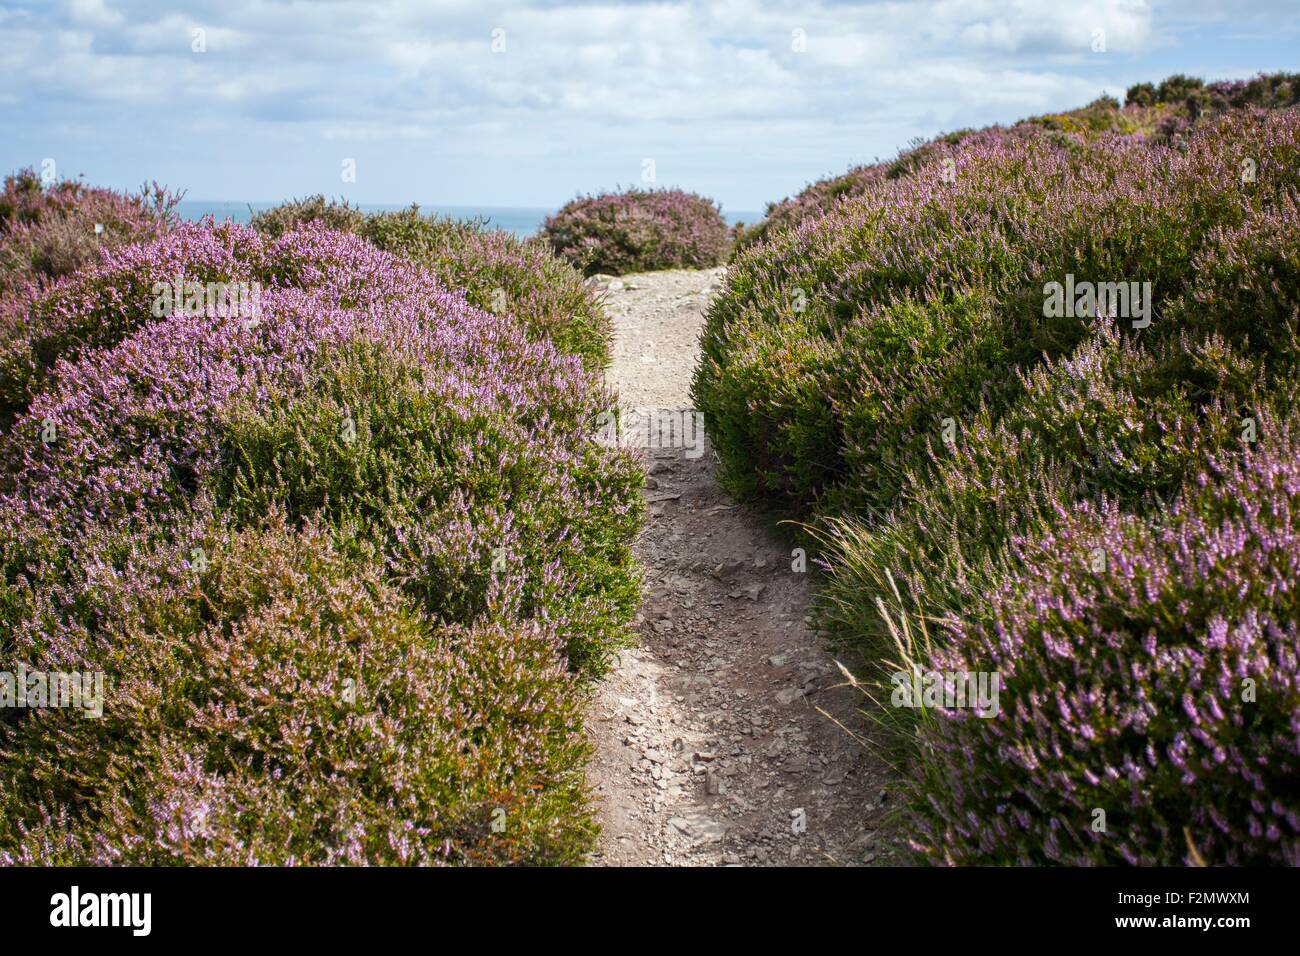 Close up of a narrow worn path through purple heather in the Irish countryside Stock Photo